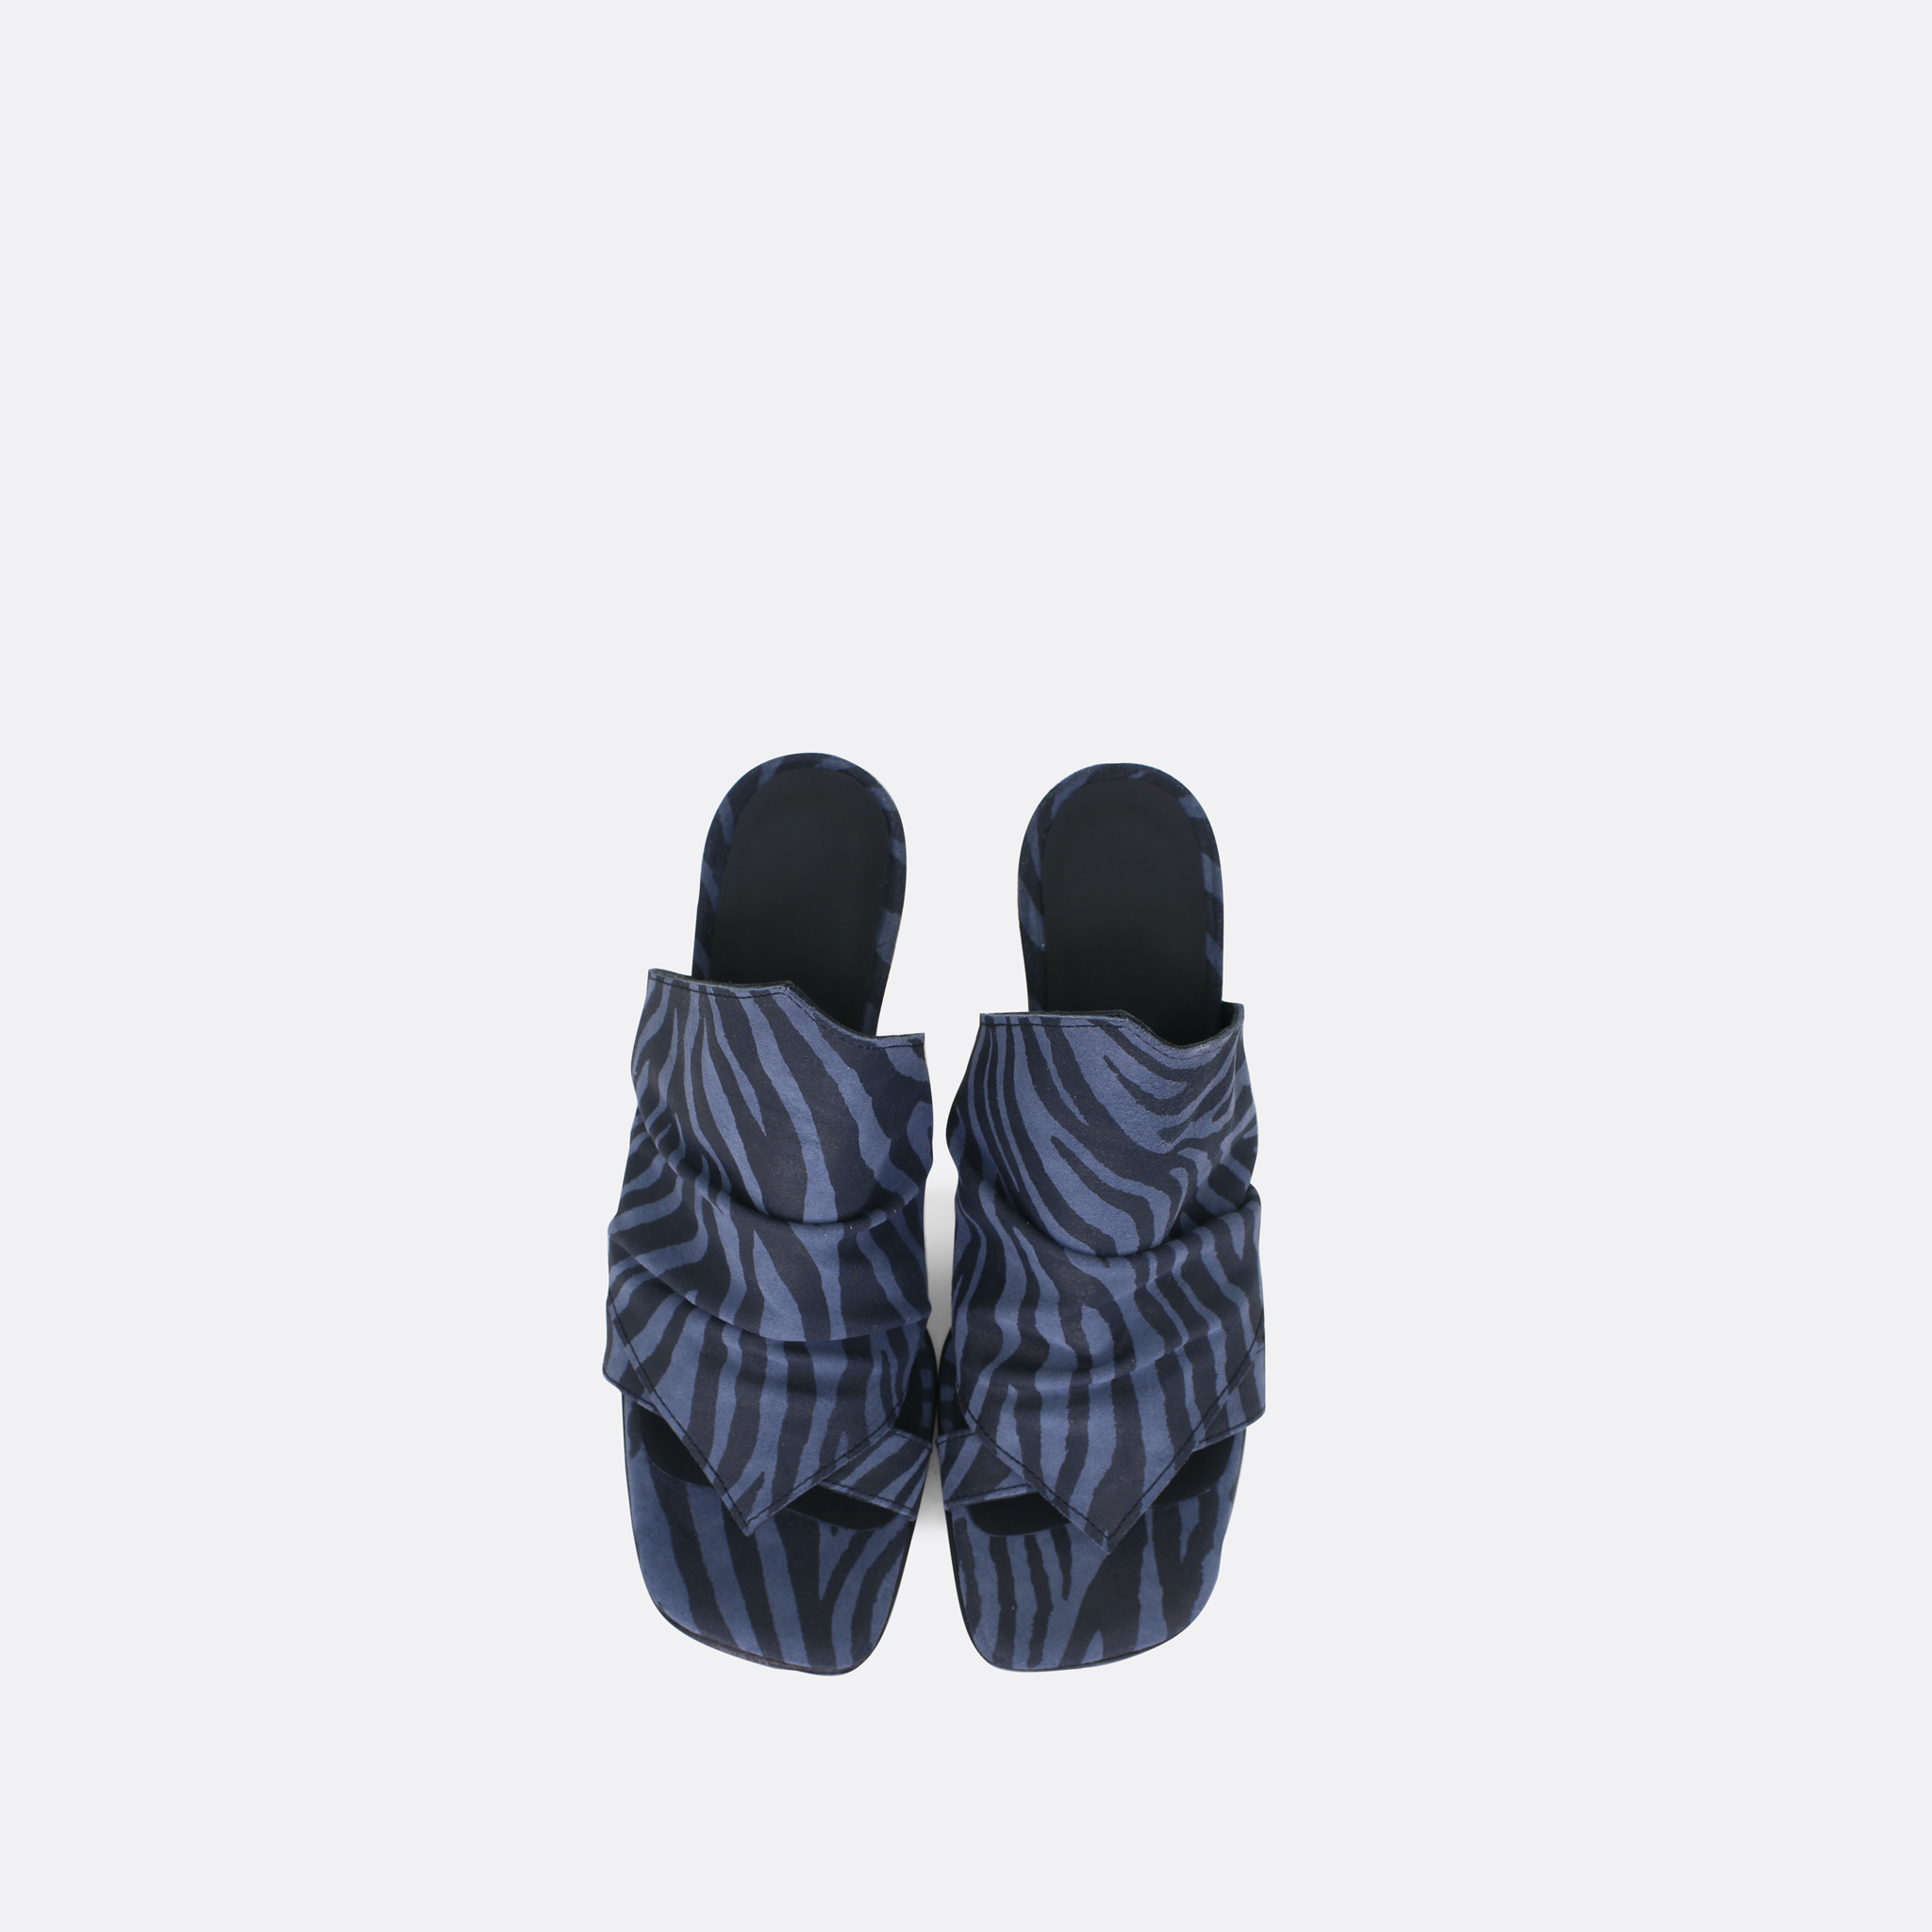 811 Plava zebra 02 - Lilu shoes